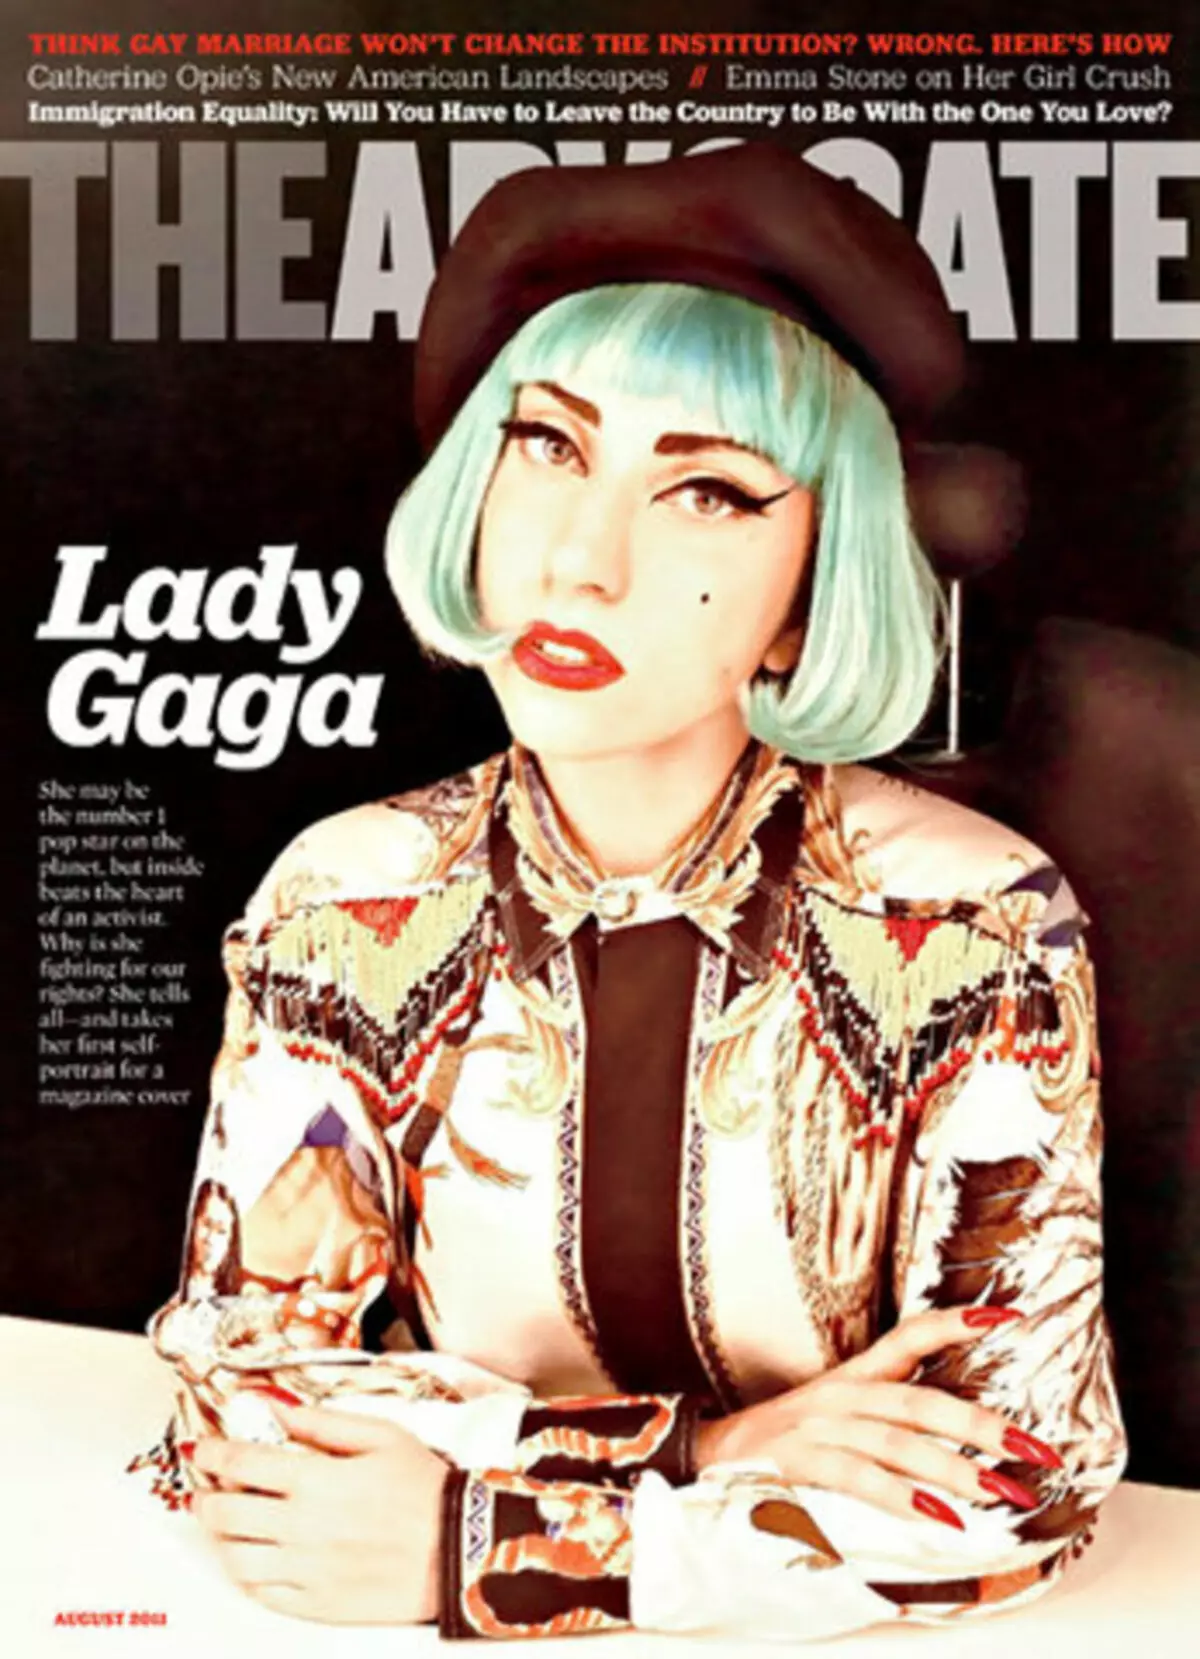 Lady Gaga ເສຍໃຈໂດຍຄໍາຖະແຫຼງທີ່ນາງຫມູນໃຊ້ຊຸມຊົນ gay